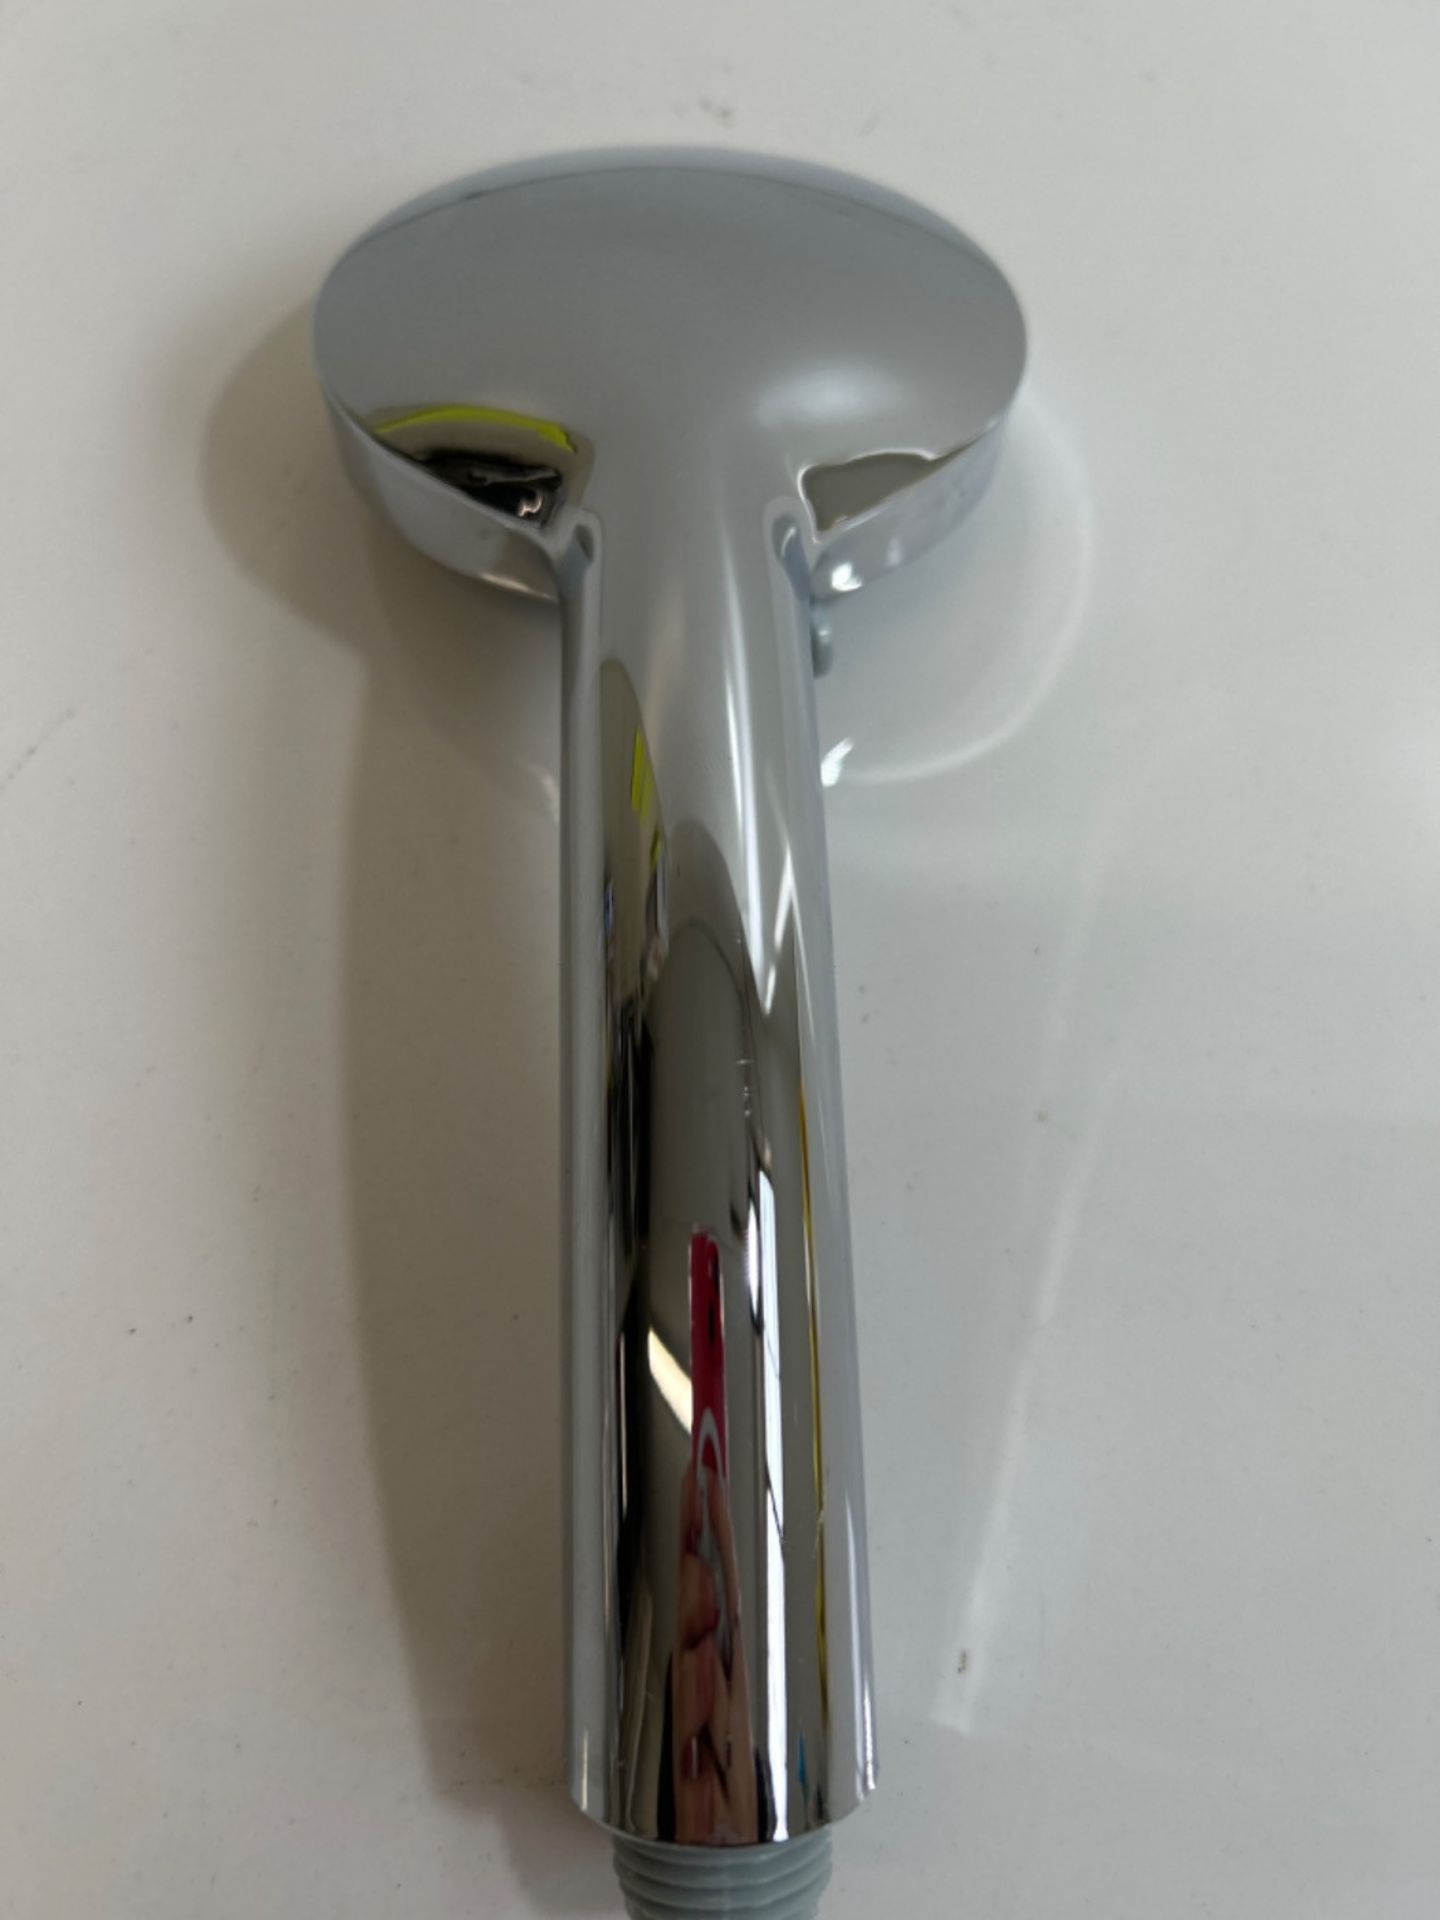 DIY Doctor Universal Shower Head - High Power Shower Head - High Pressure Shower Heads - 5 Adjustab - Image 2 of 3